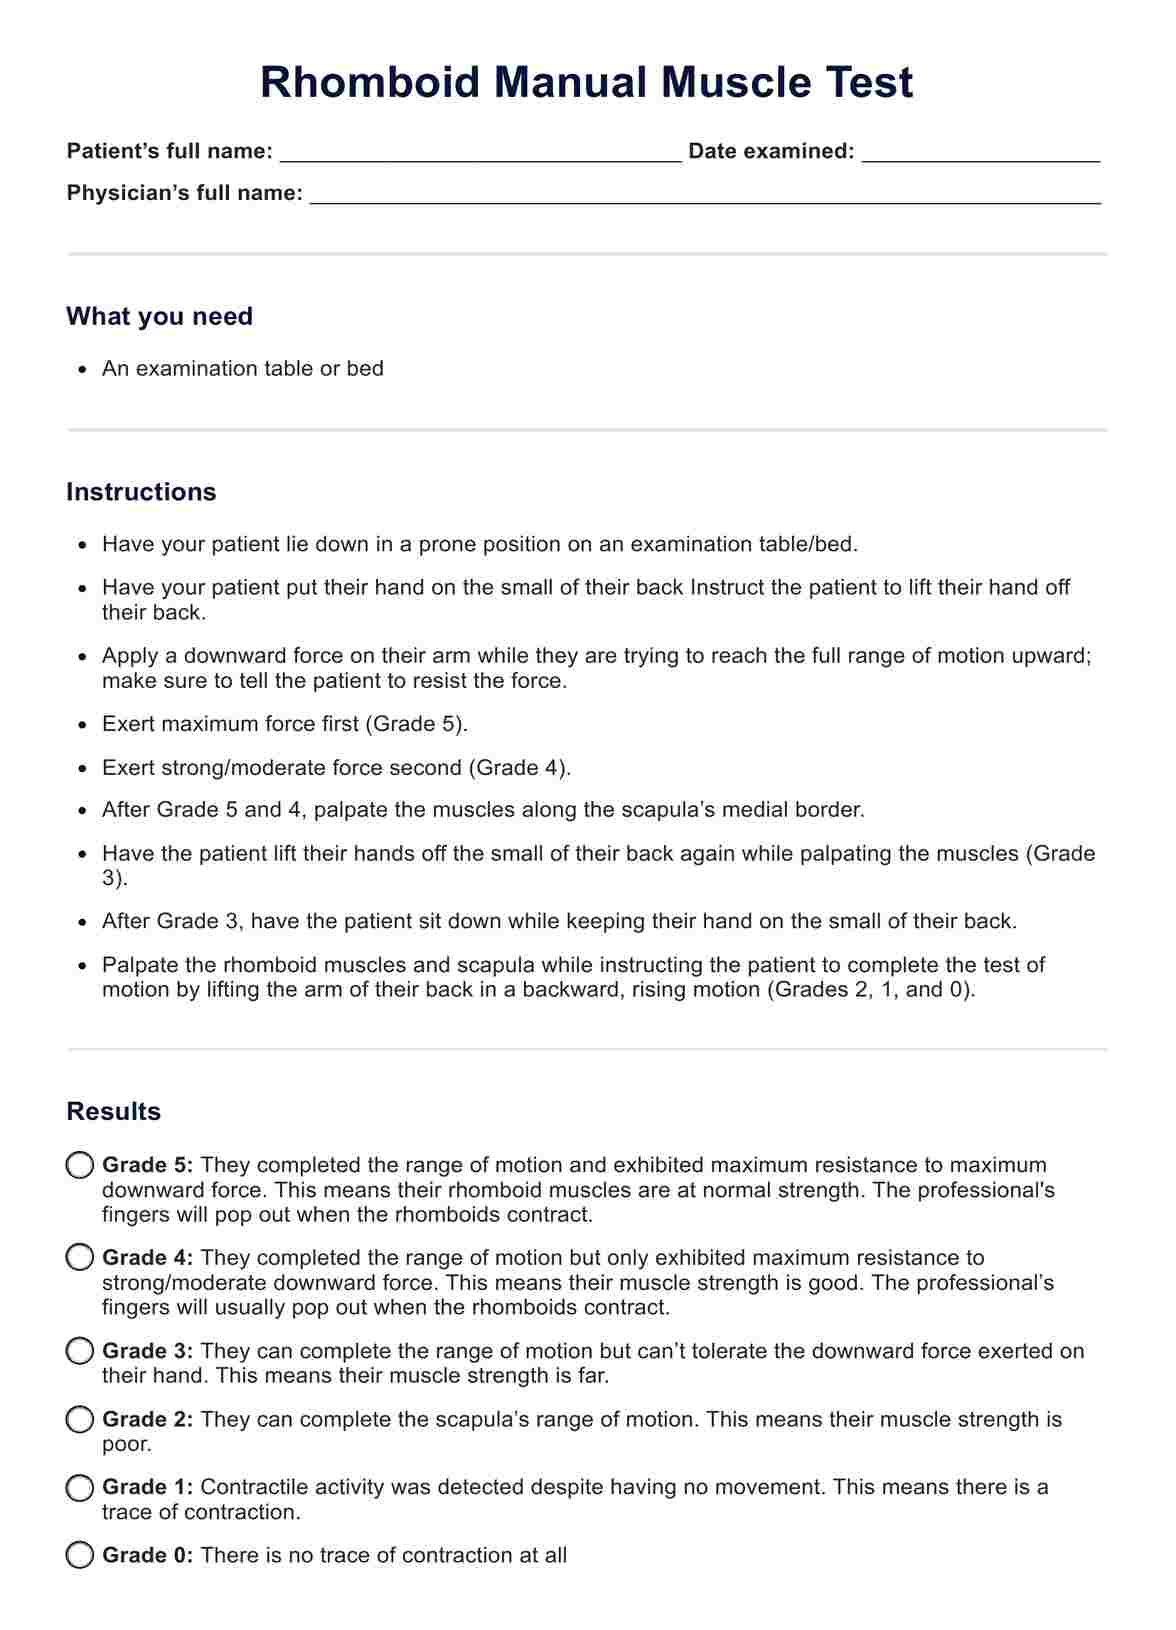 Rhomboid Manual Muscle Test PDF Example